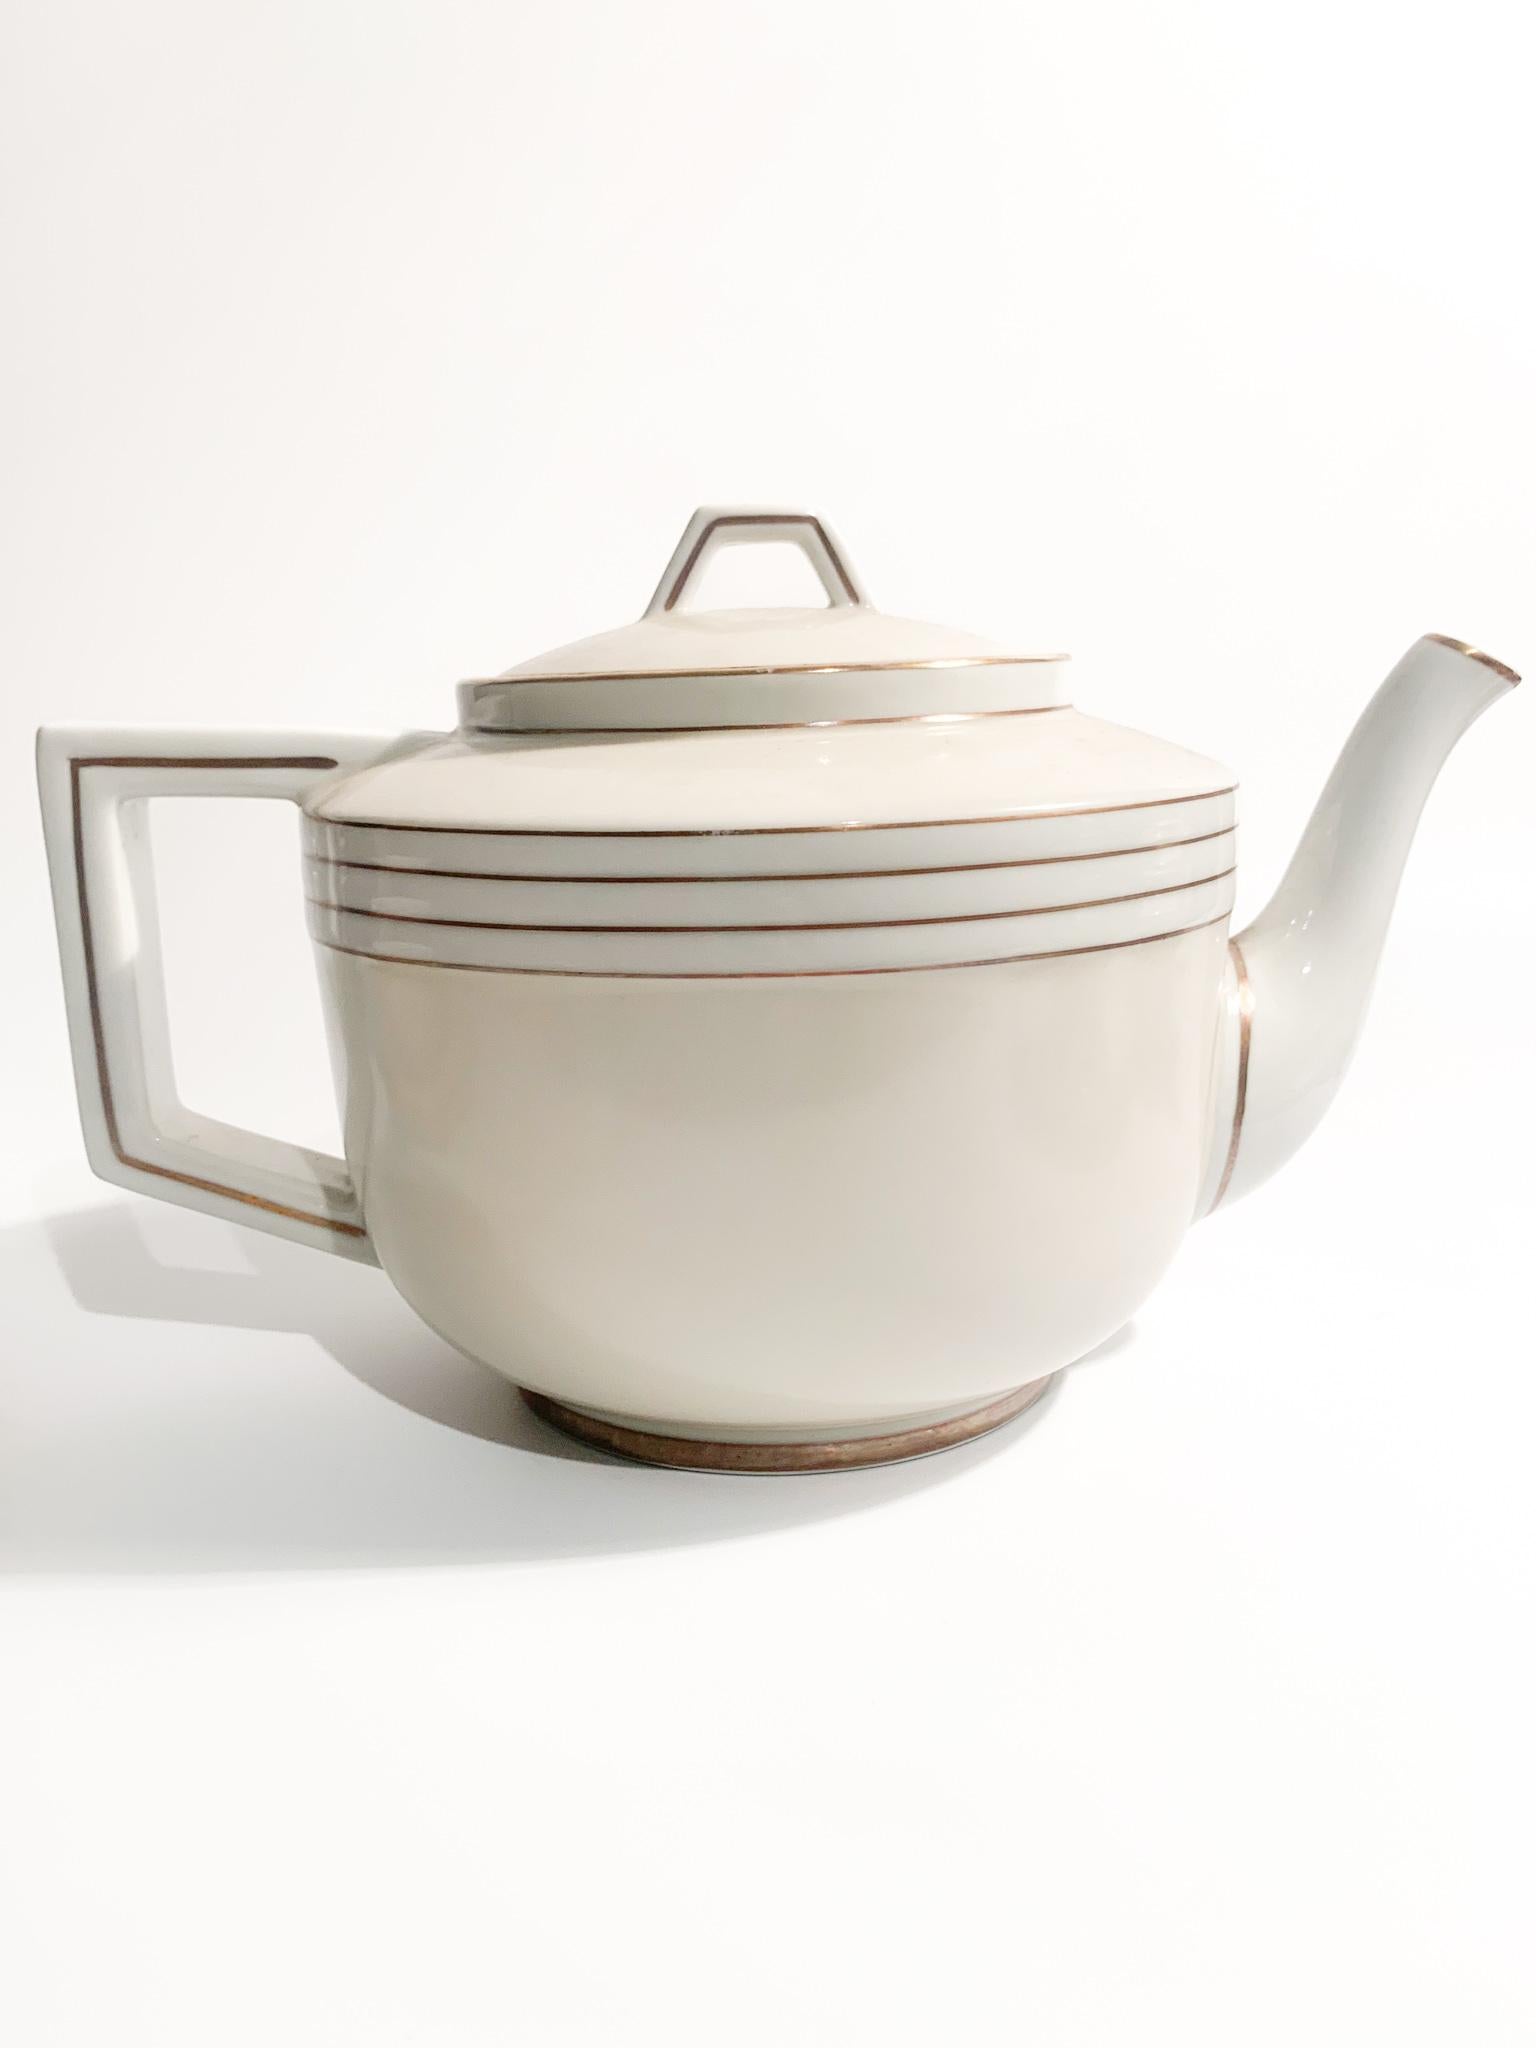 Twelve Richard Ginori Decò Tea Set in Porcelain from the 1940s For Sale 3